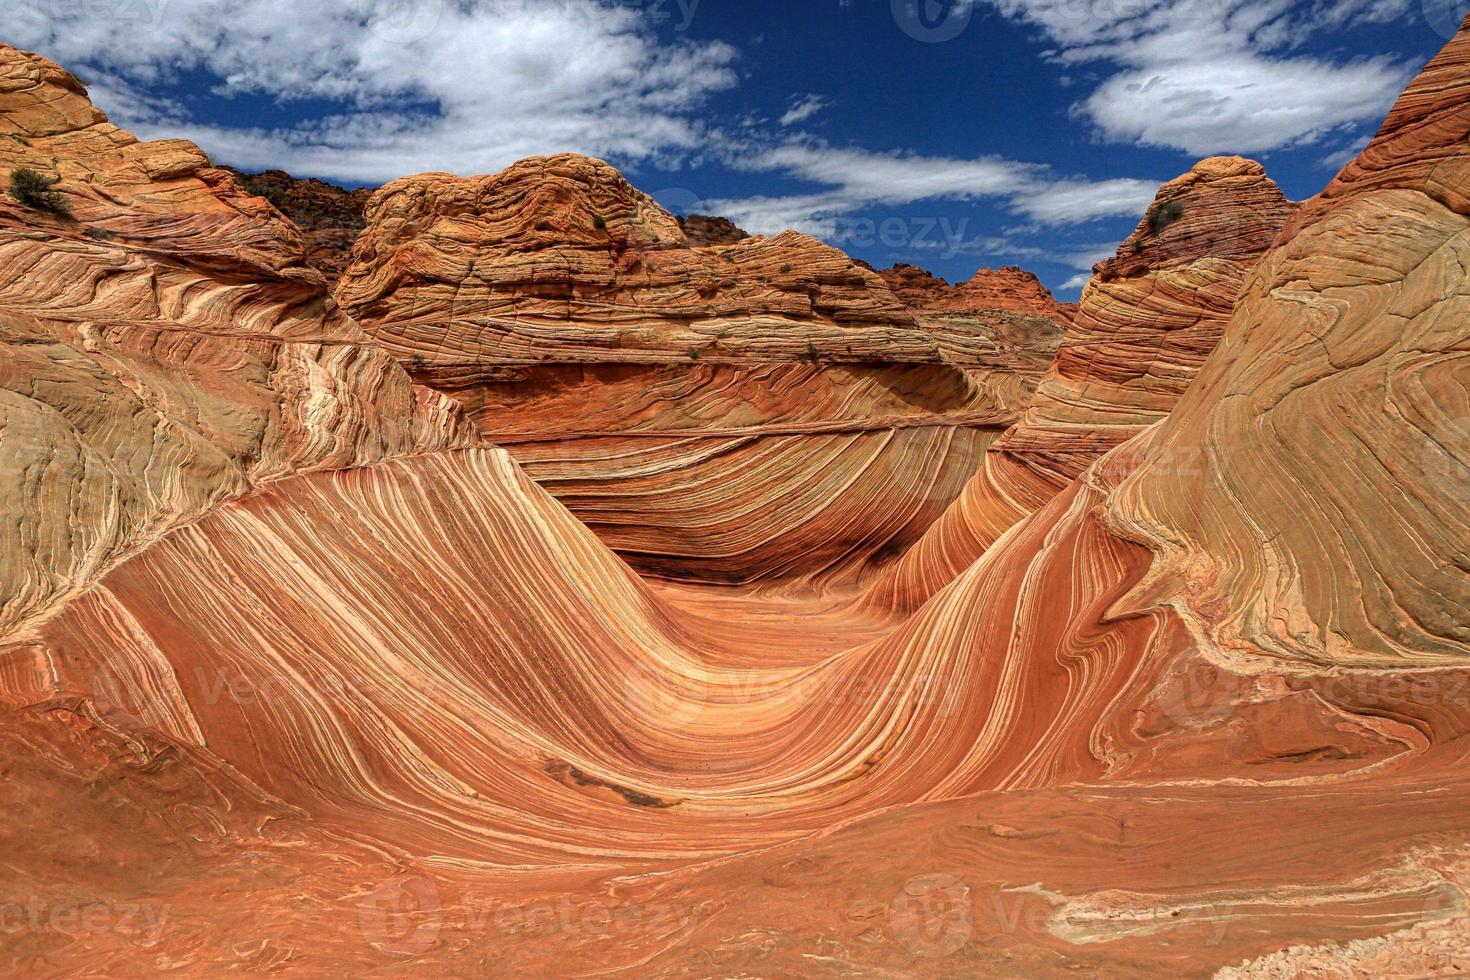 die welle navajo sandformation in arizona usa foto